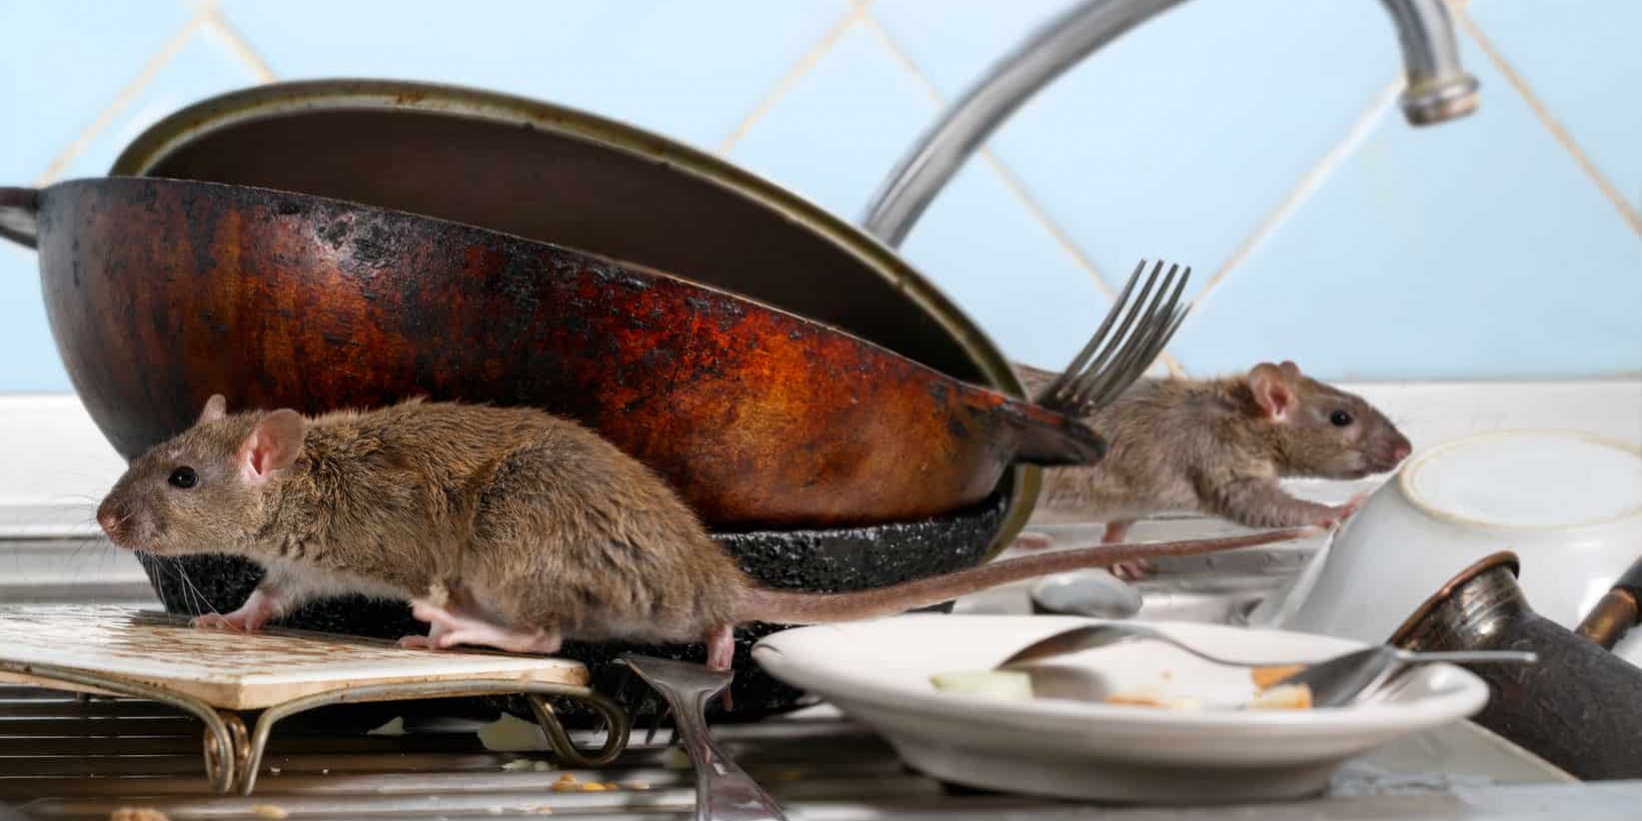 rats in kitchen sink